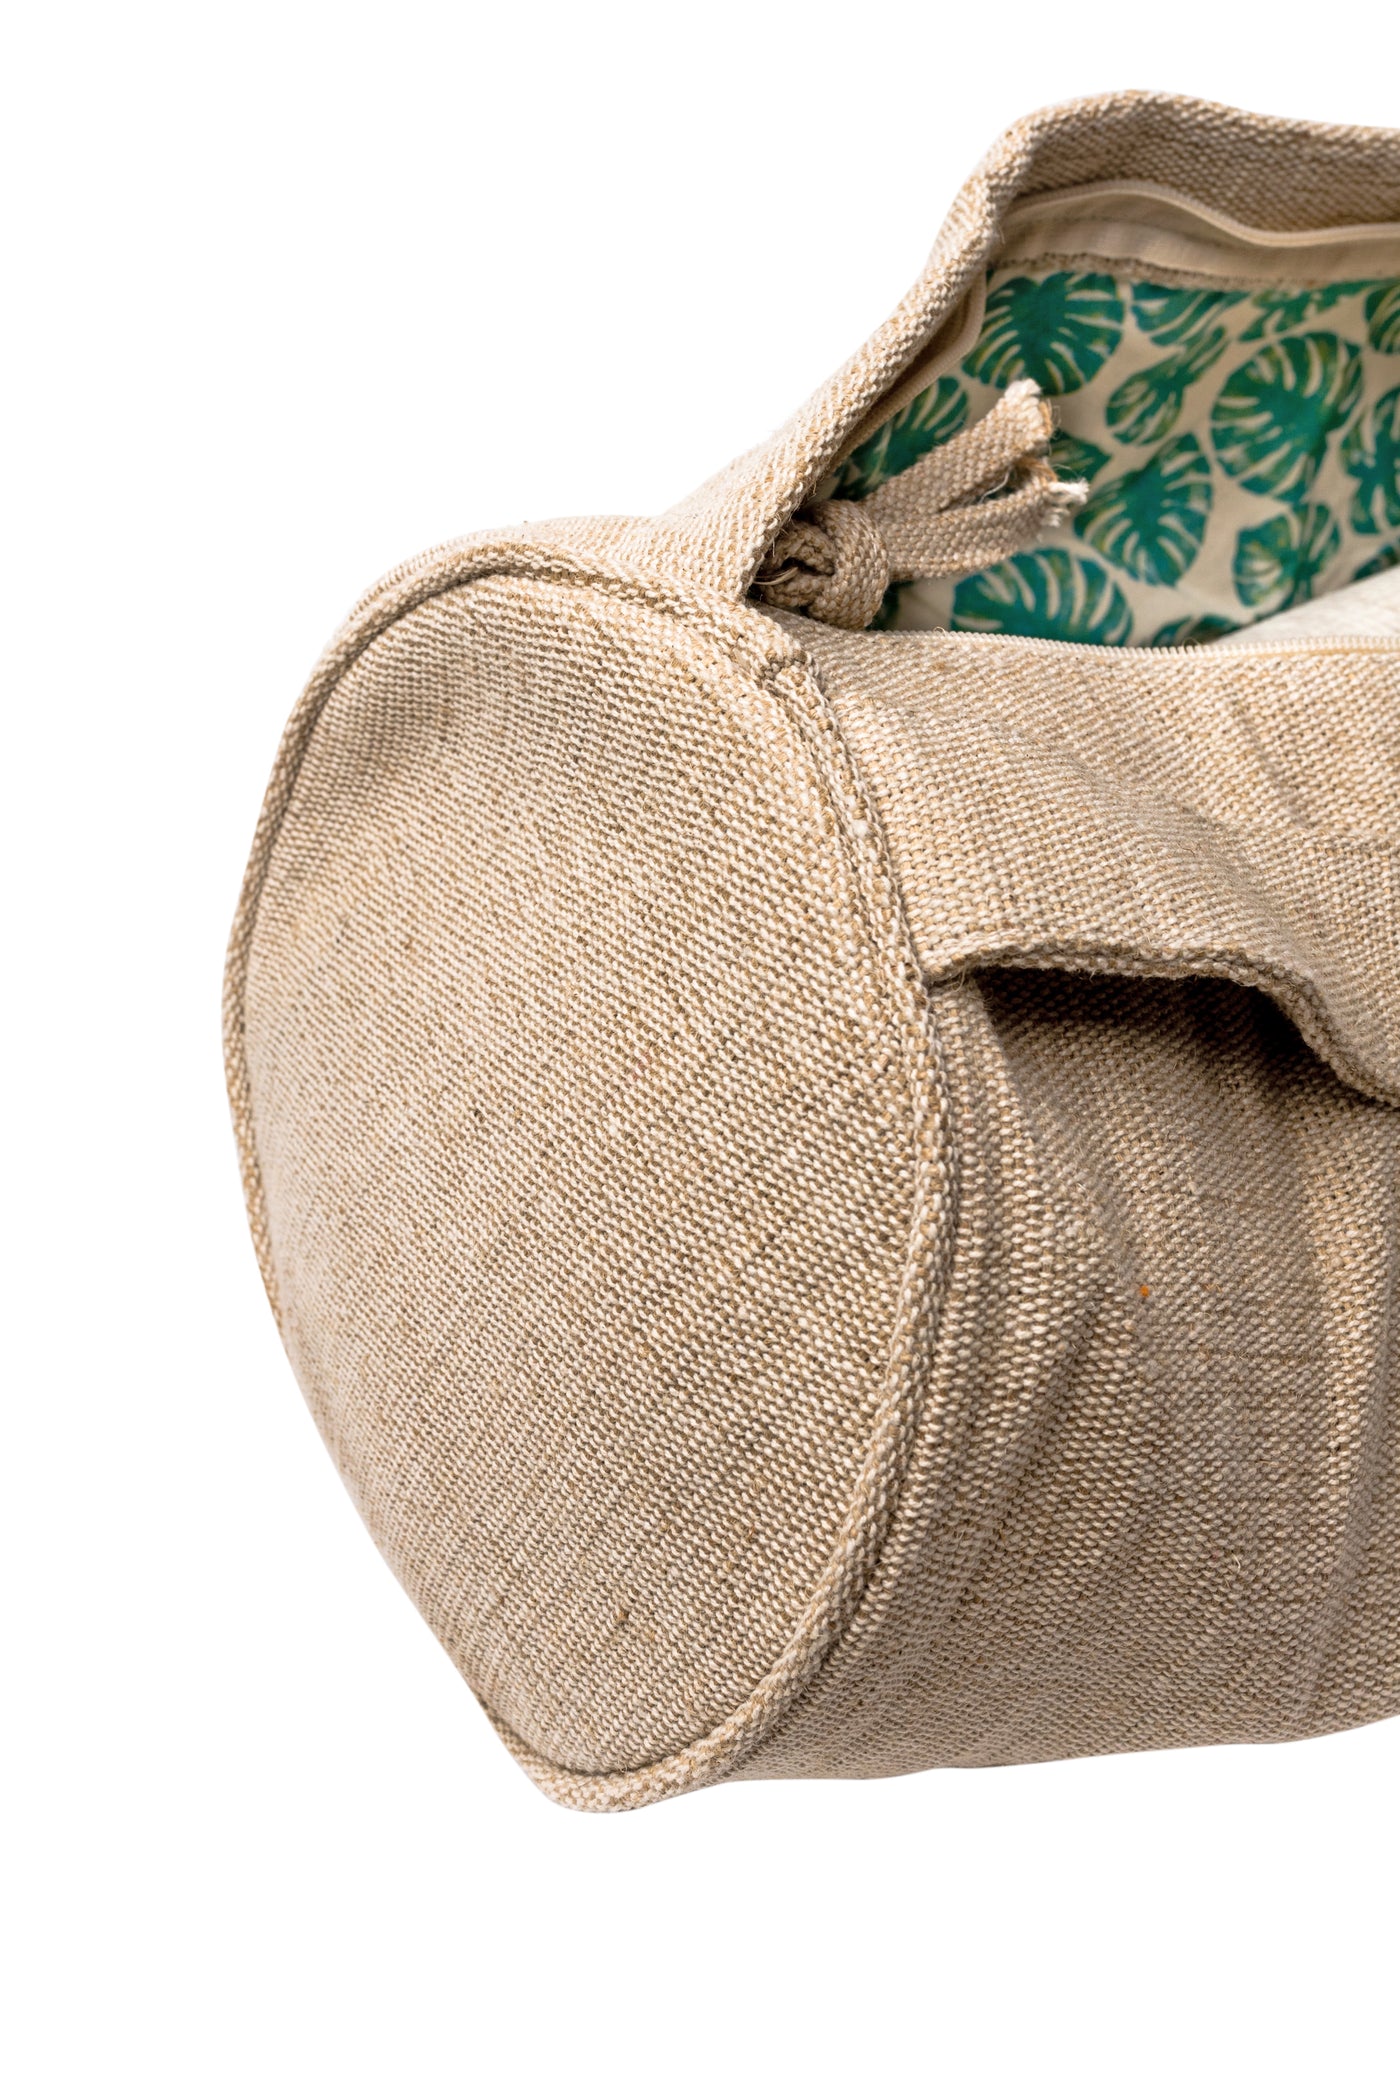 Yoga Mat Bags - Buy Yoga Mat Bags Online at Best Prices In India